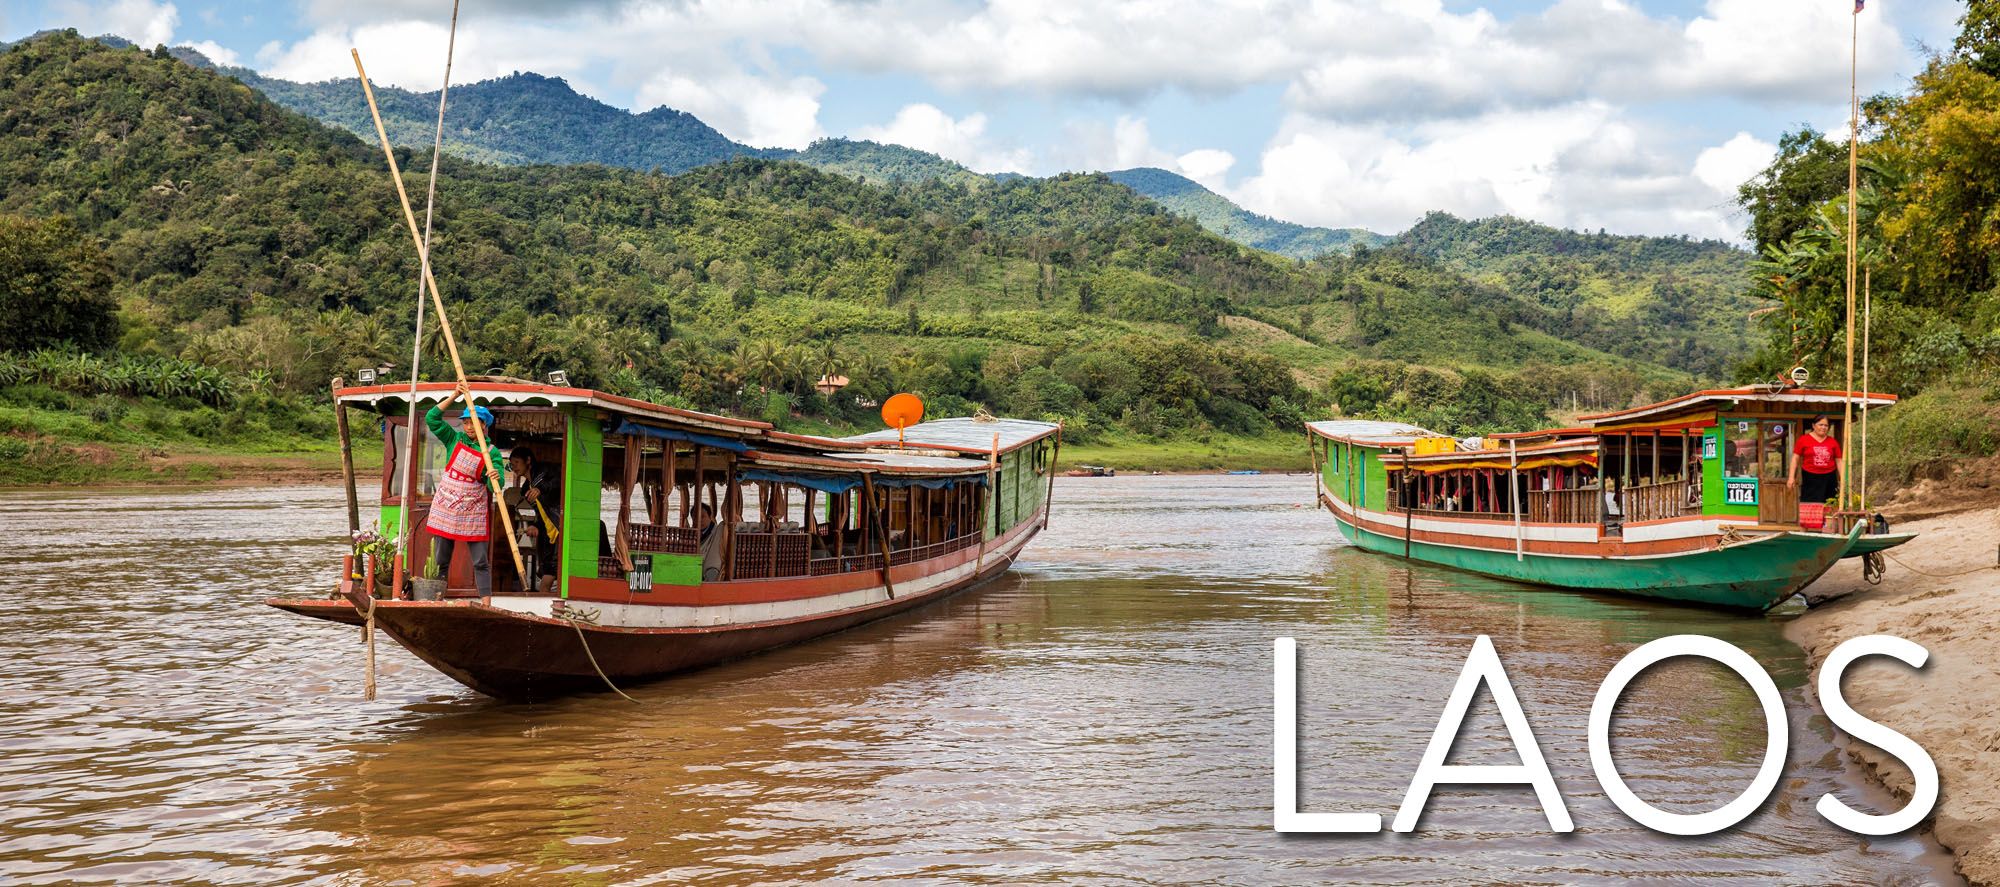 Laos Travel Guide